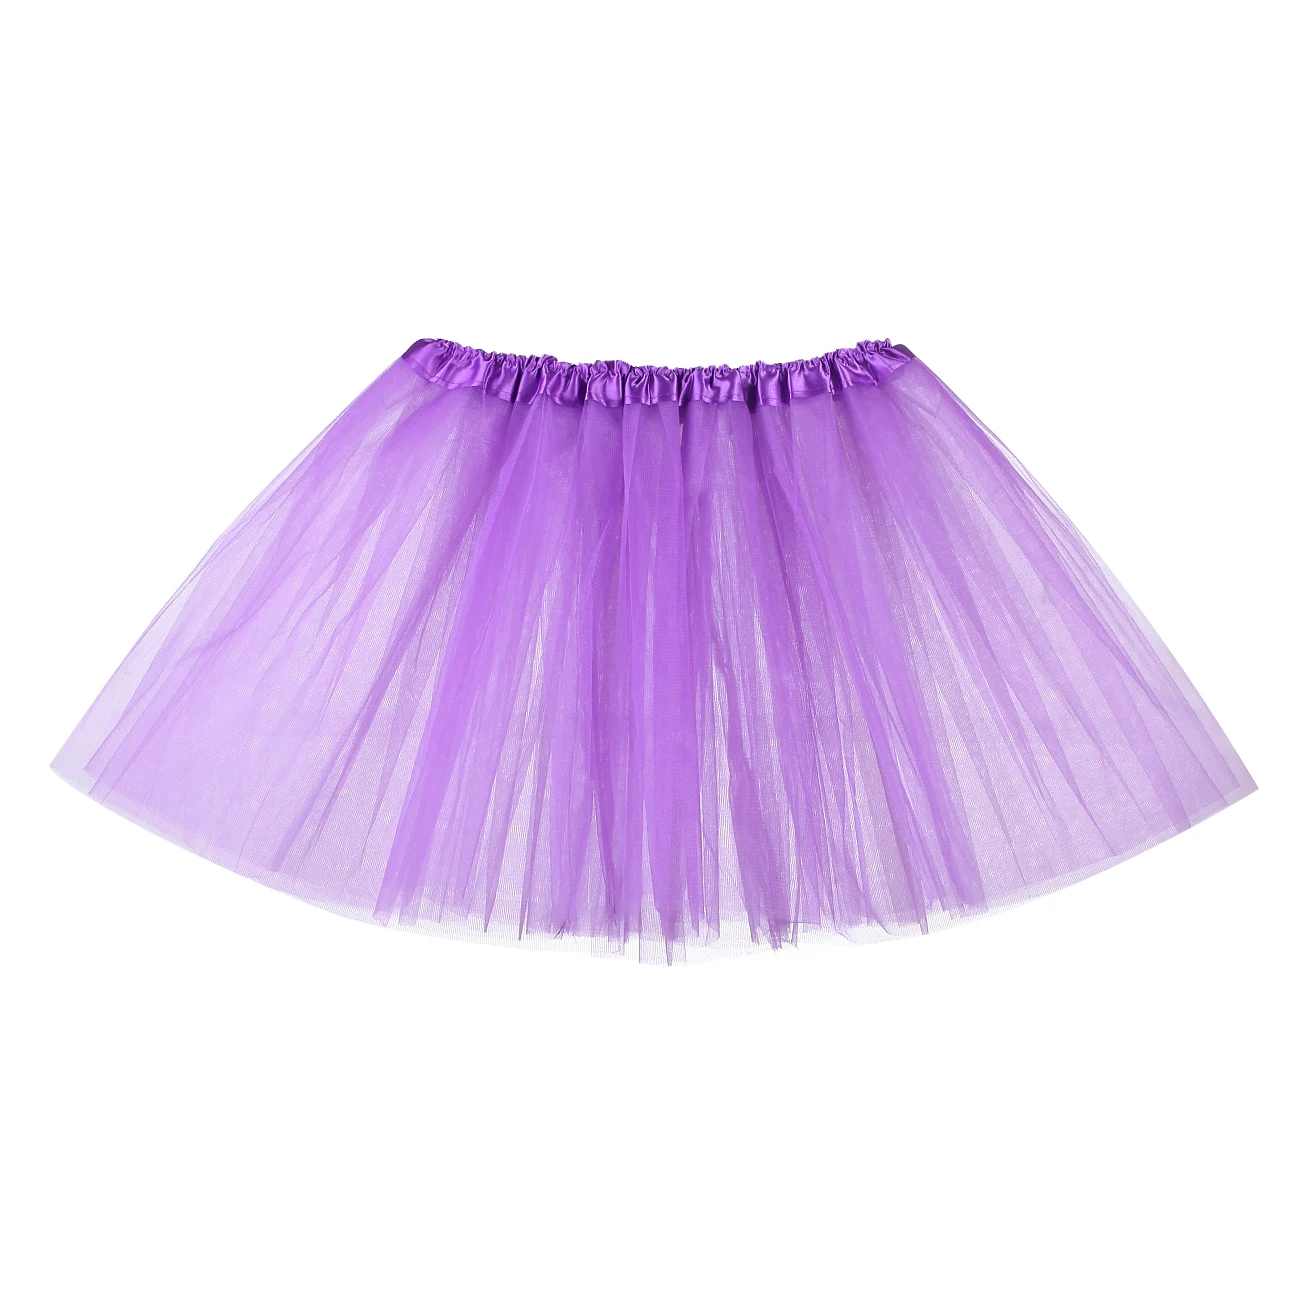 skirt and top Women Vintage Tulle Skirt Short Tutu Mini Skirts Adult Fancy Ballet Dancewear Party Costume Ball Gown Mini skirt Summer 2020 Hot maxi skirt Skirts